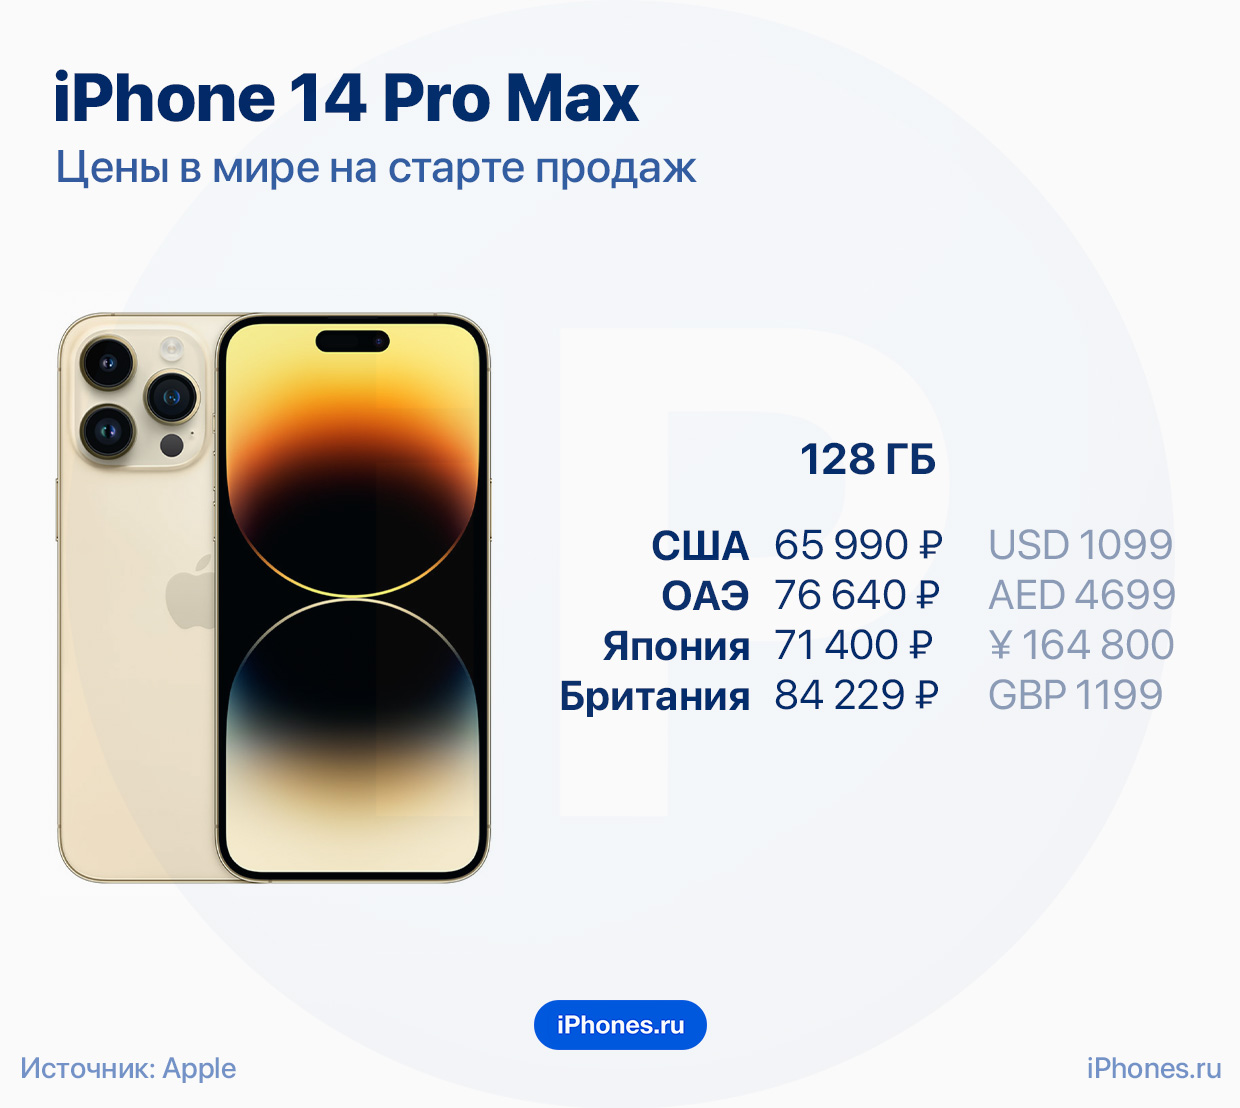 Iphone 7 plus динамика цен. Iphone 14 Pro Max. Iphone 14 Pro и iphone 14 Pro Max. Ширина iphone 11 Pro Max. Iphone 14 Pro Max 2022.